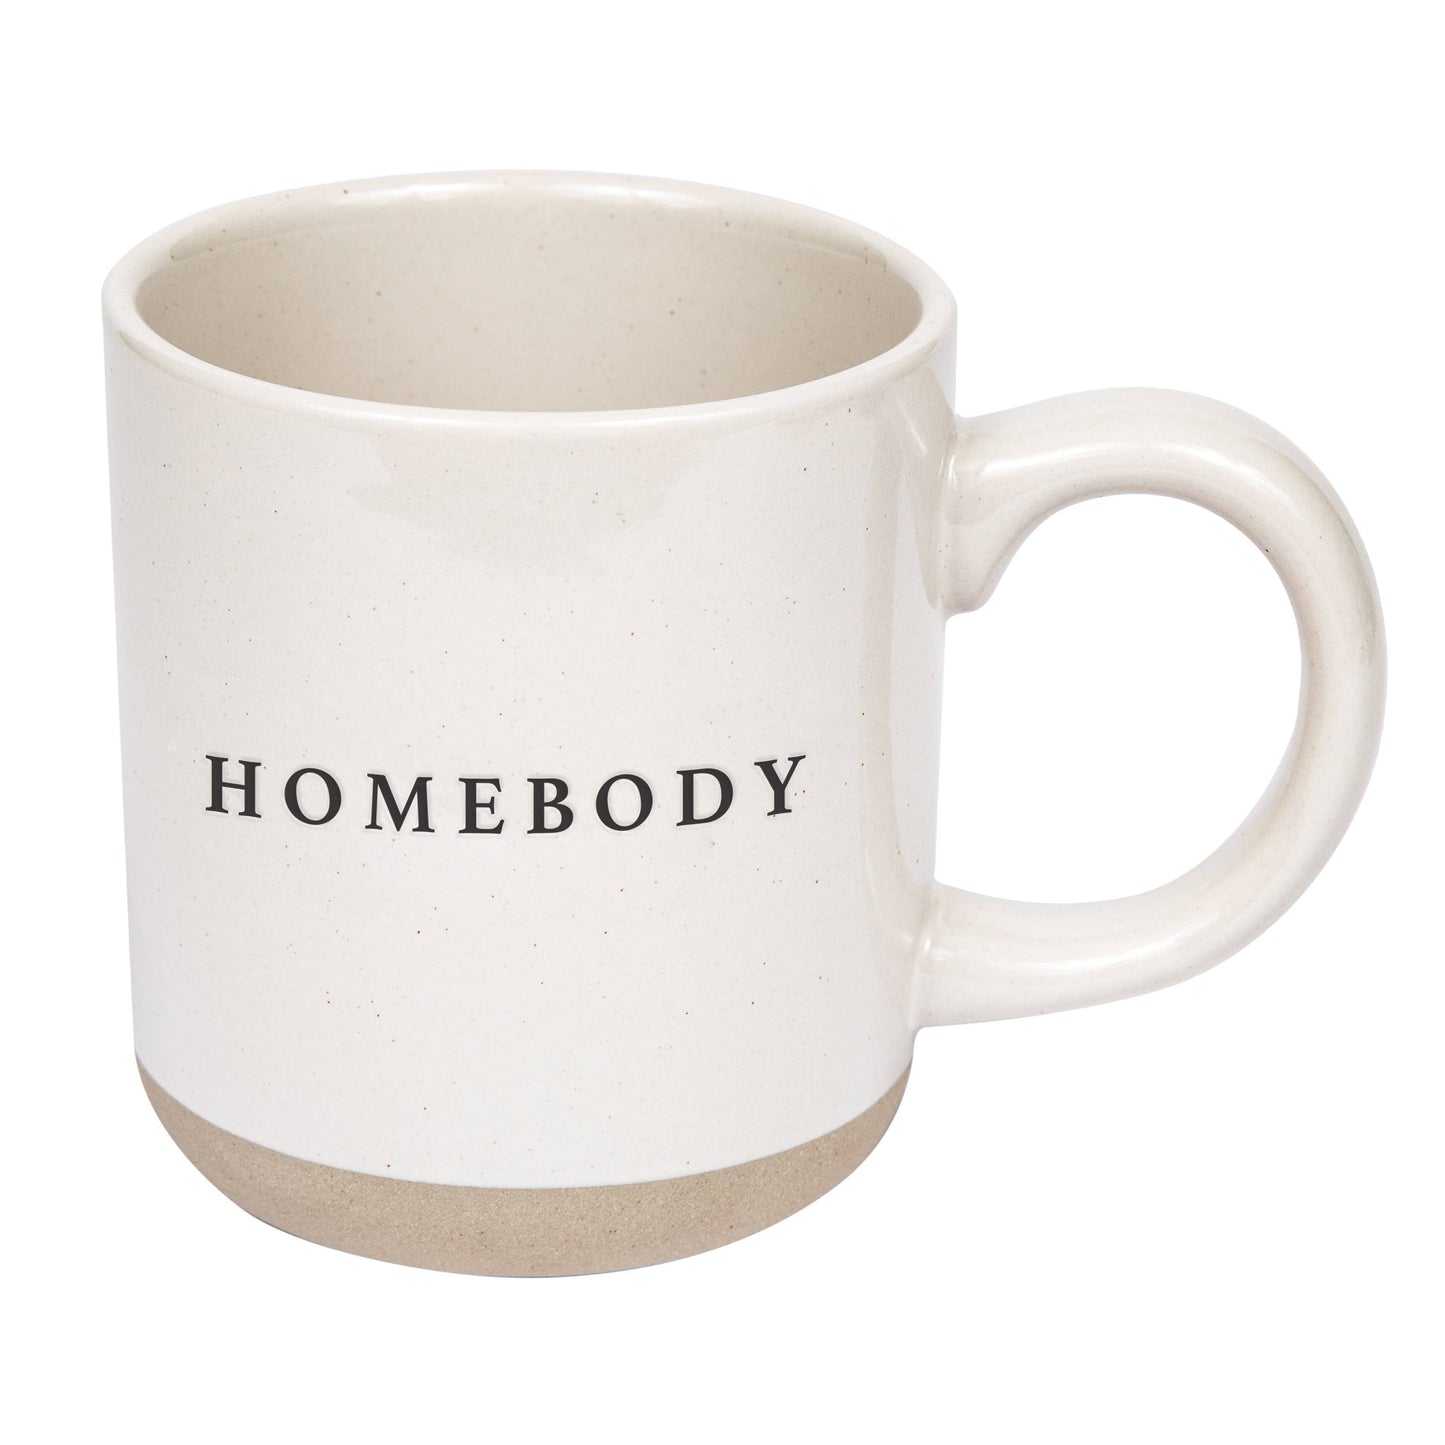 Homebody Stoneware Coffee Mug - Gifts & Home Decor